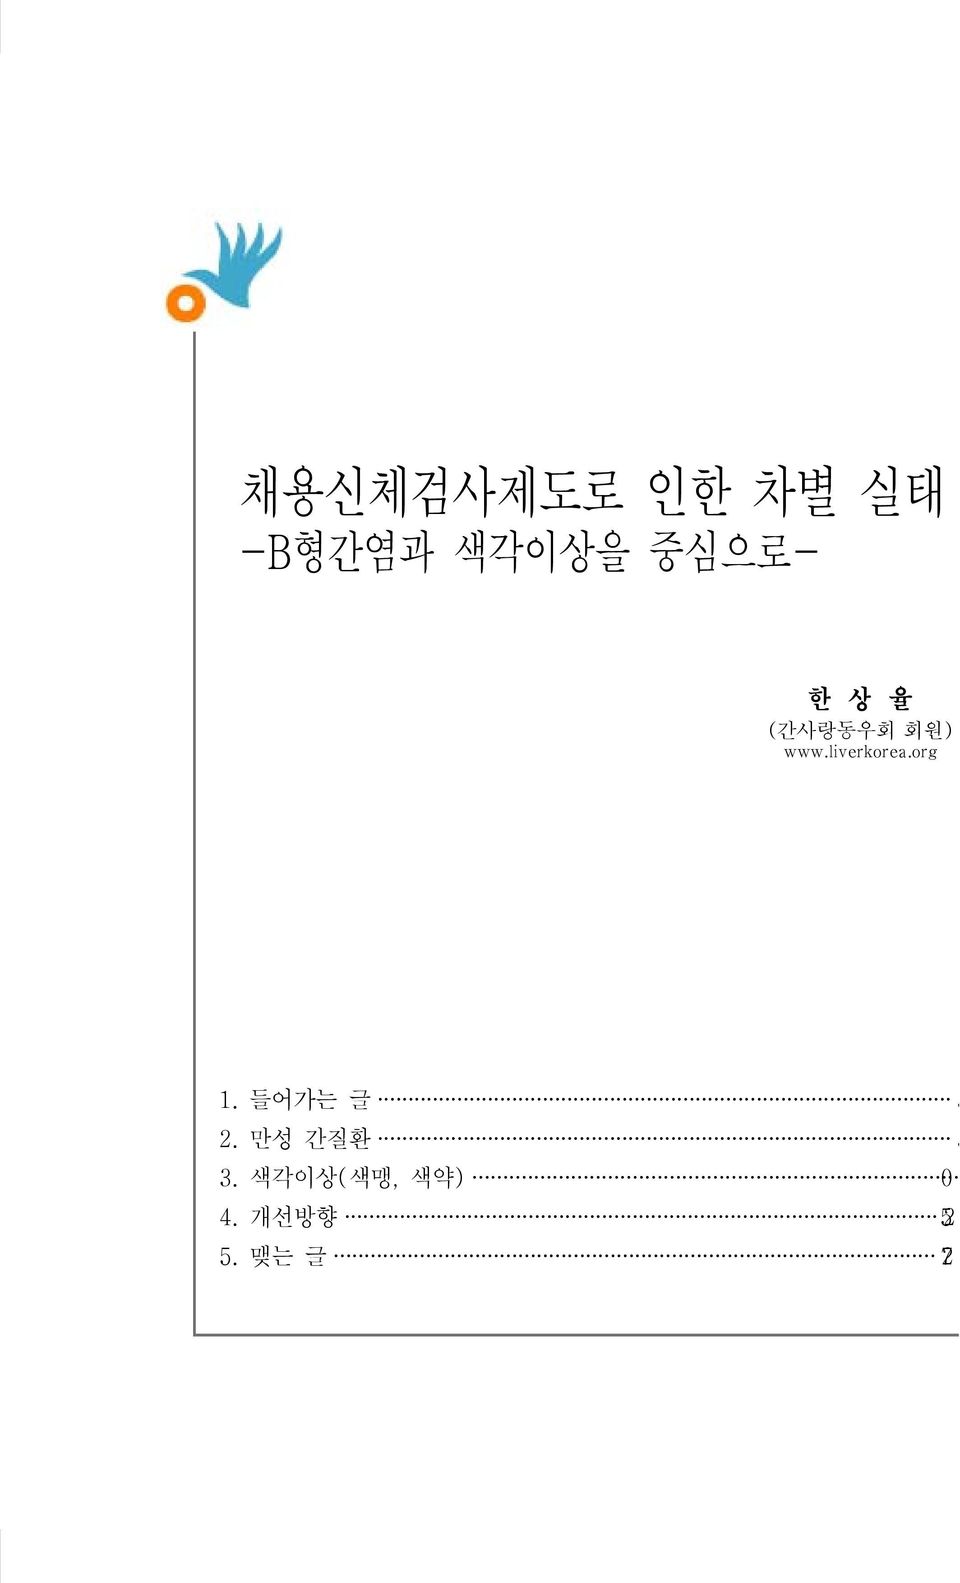 liverkorea.org 1. 들어가는 글 3 2.